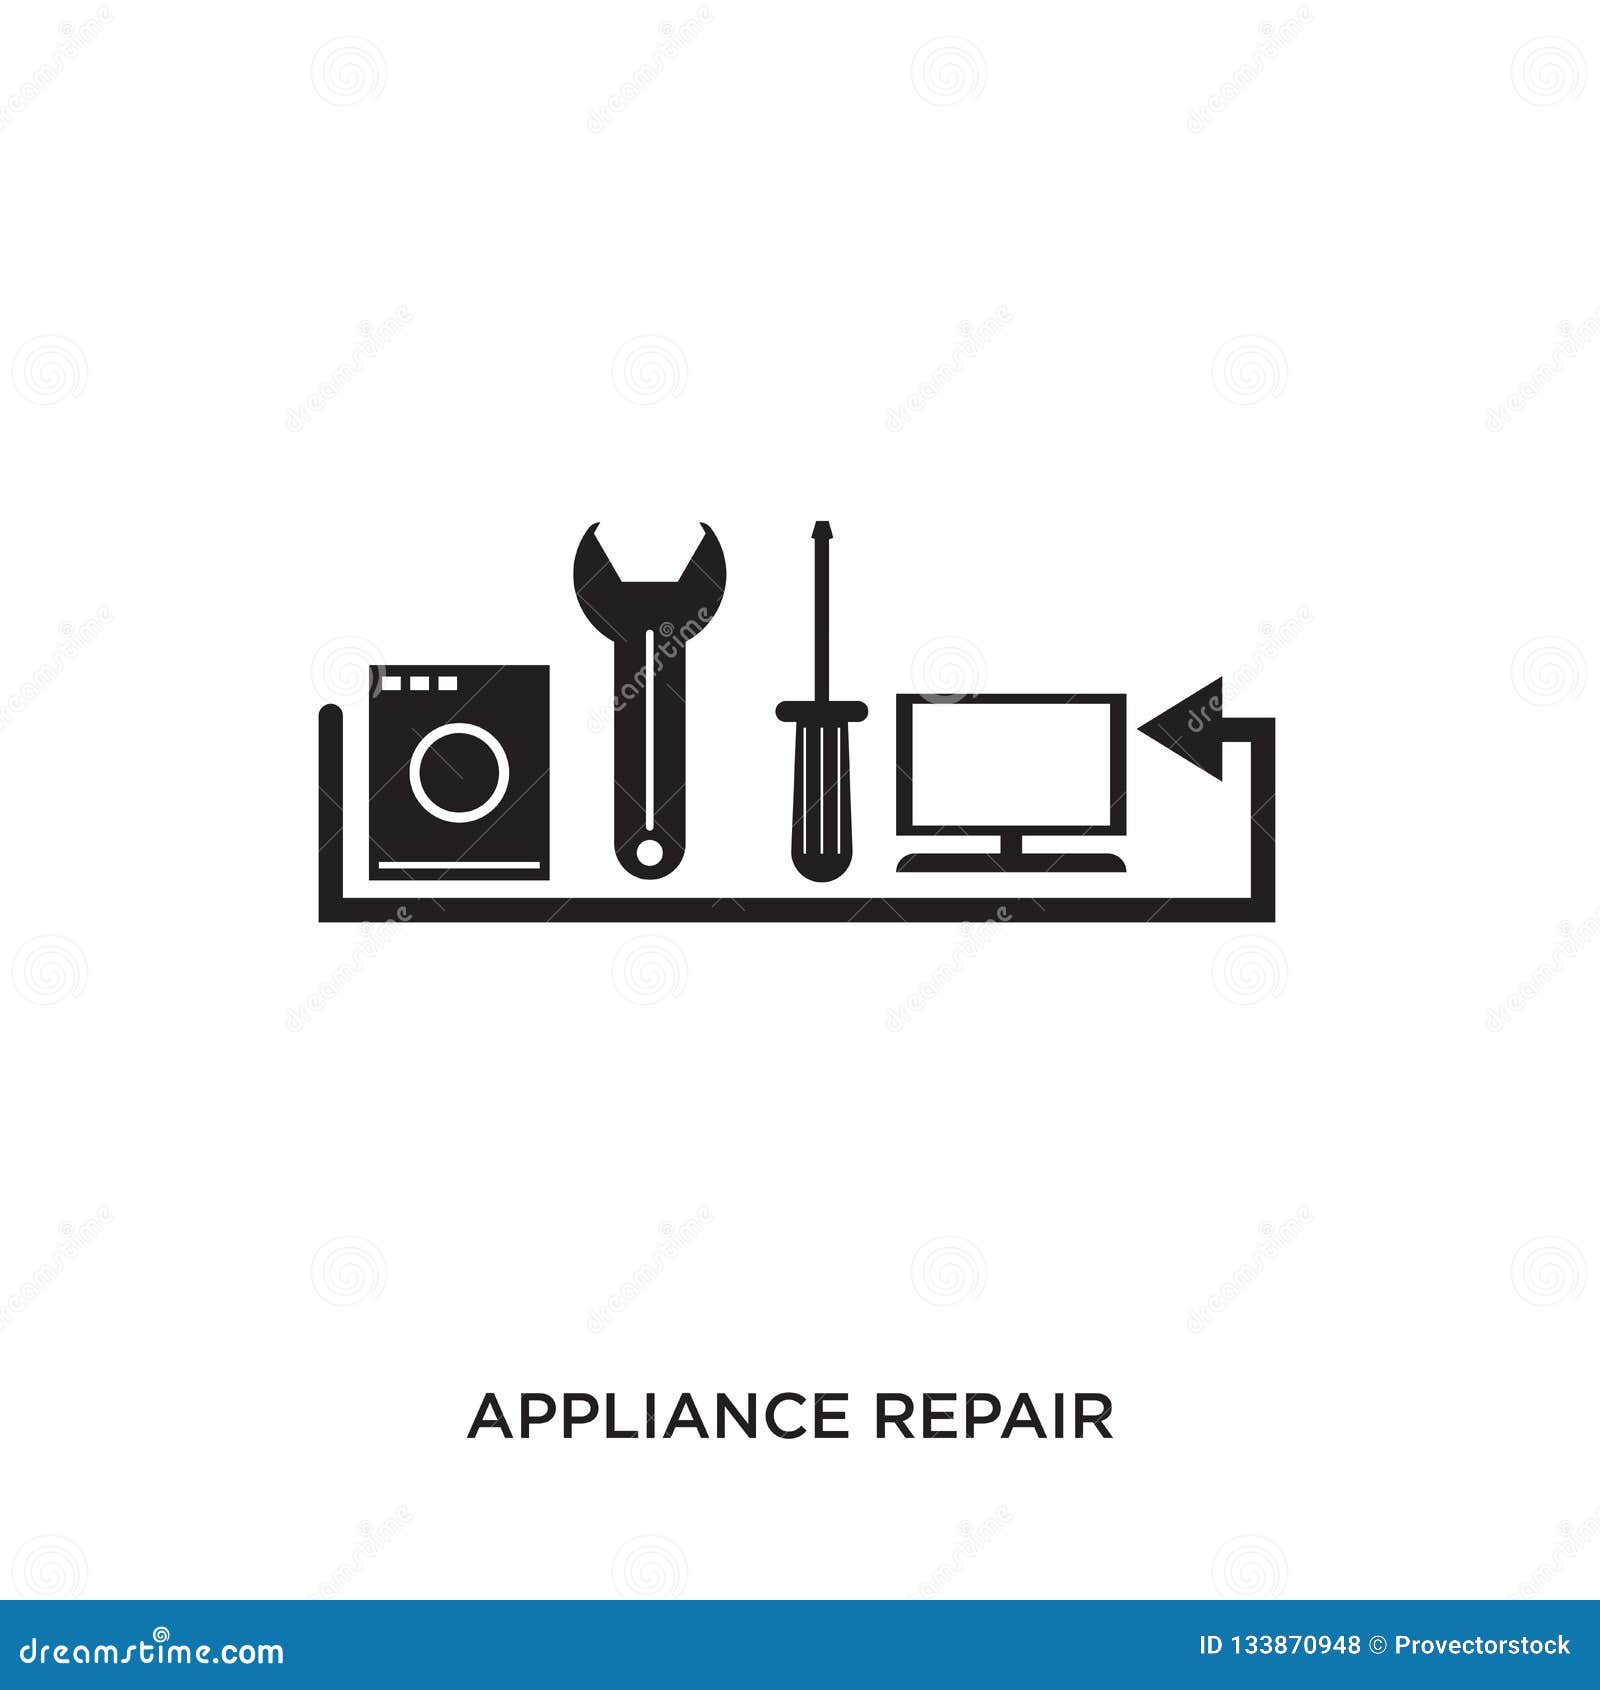 Tucson Refrigerator Repair Dependable Refrigeration & Appliance Repair Service